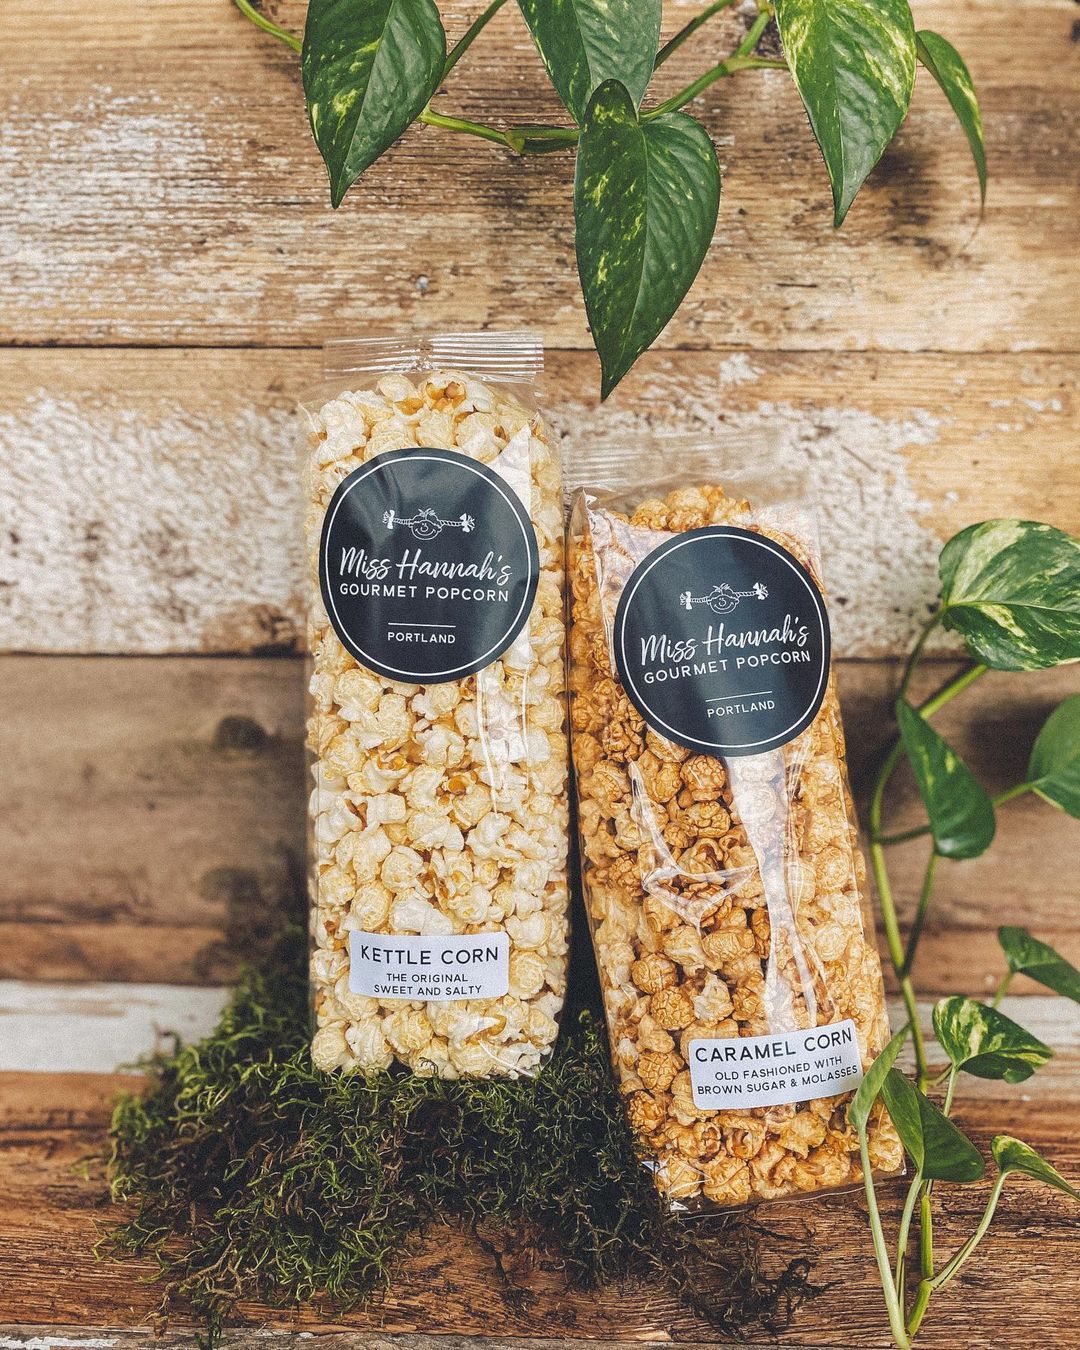 Kettle Corn and Caramel Corn Popcorn by Miss Hannah’s Gourmet Popcorn